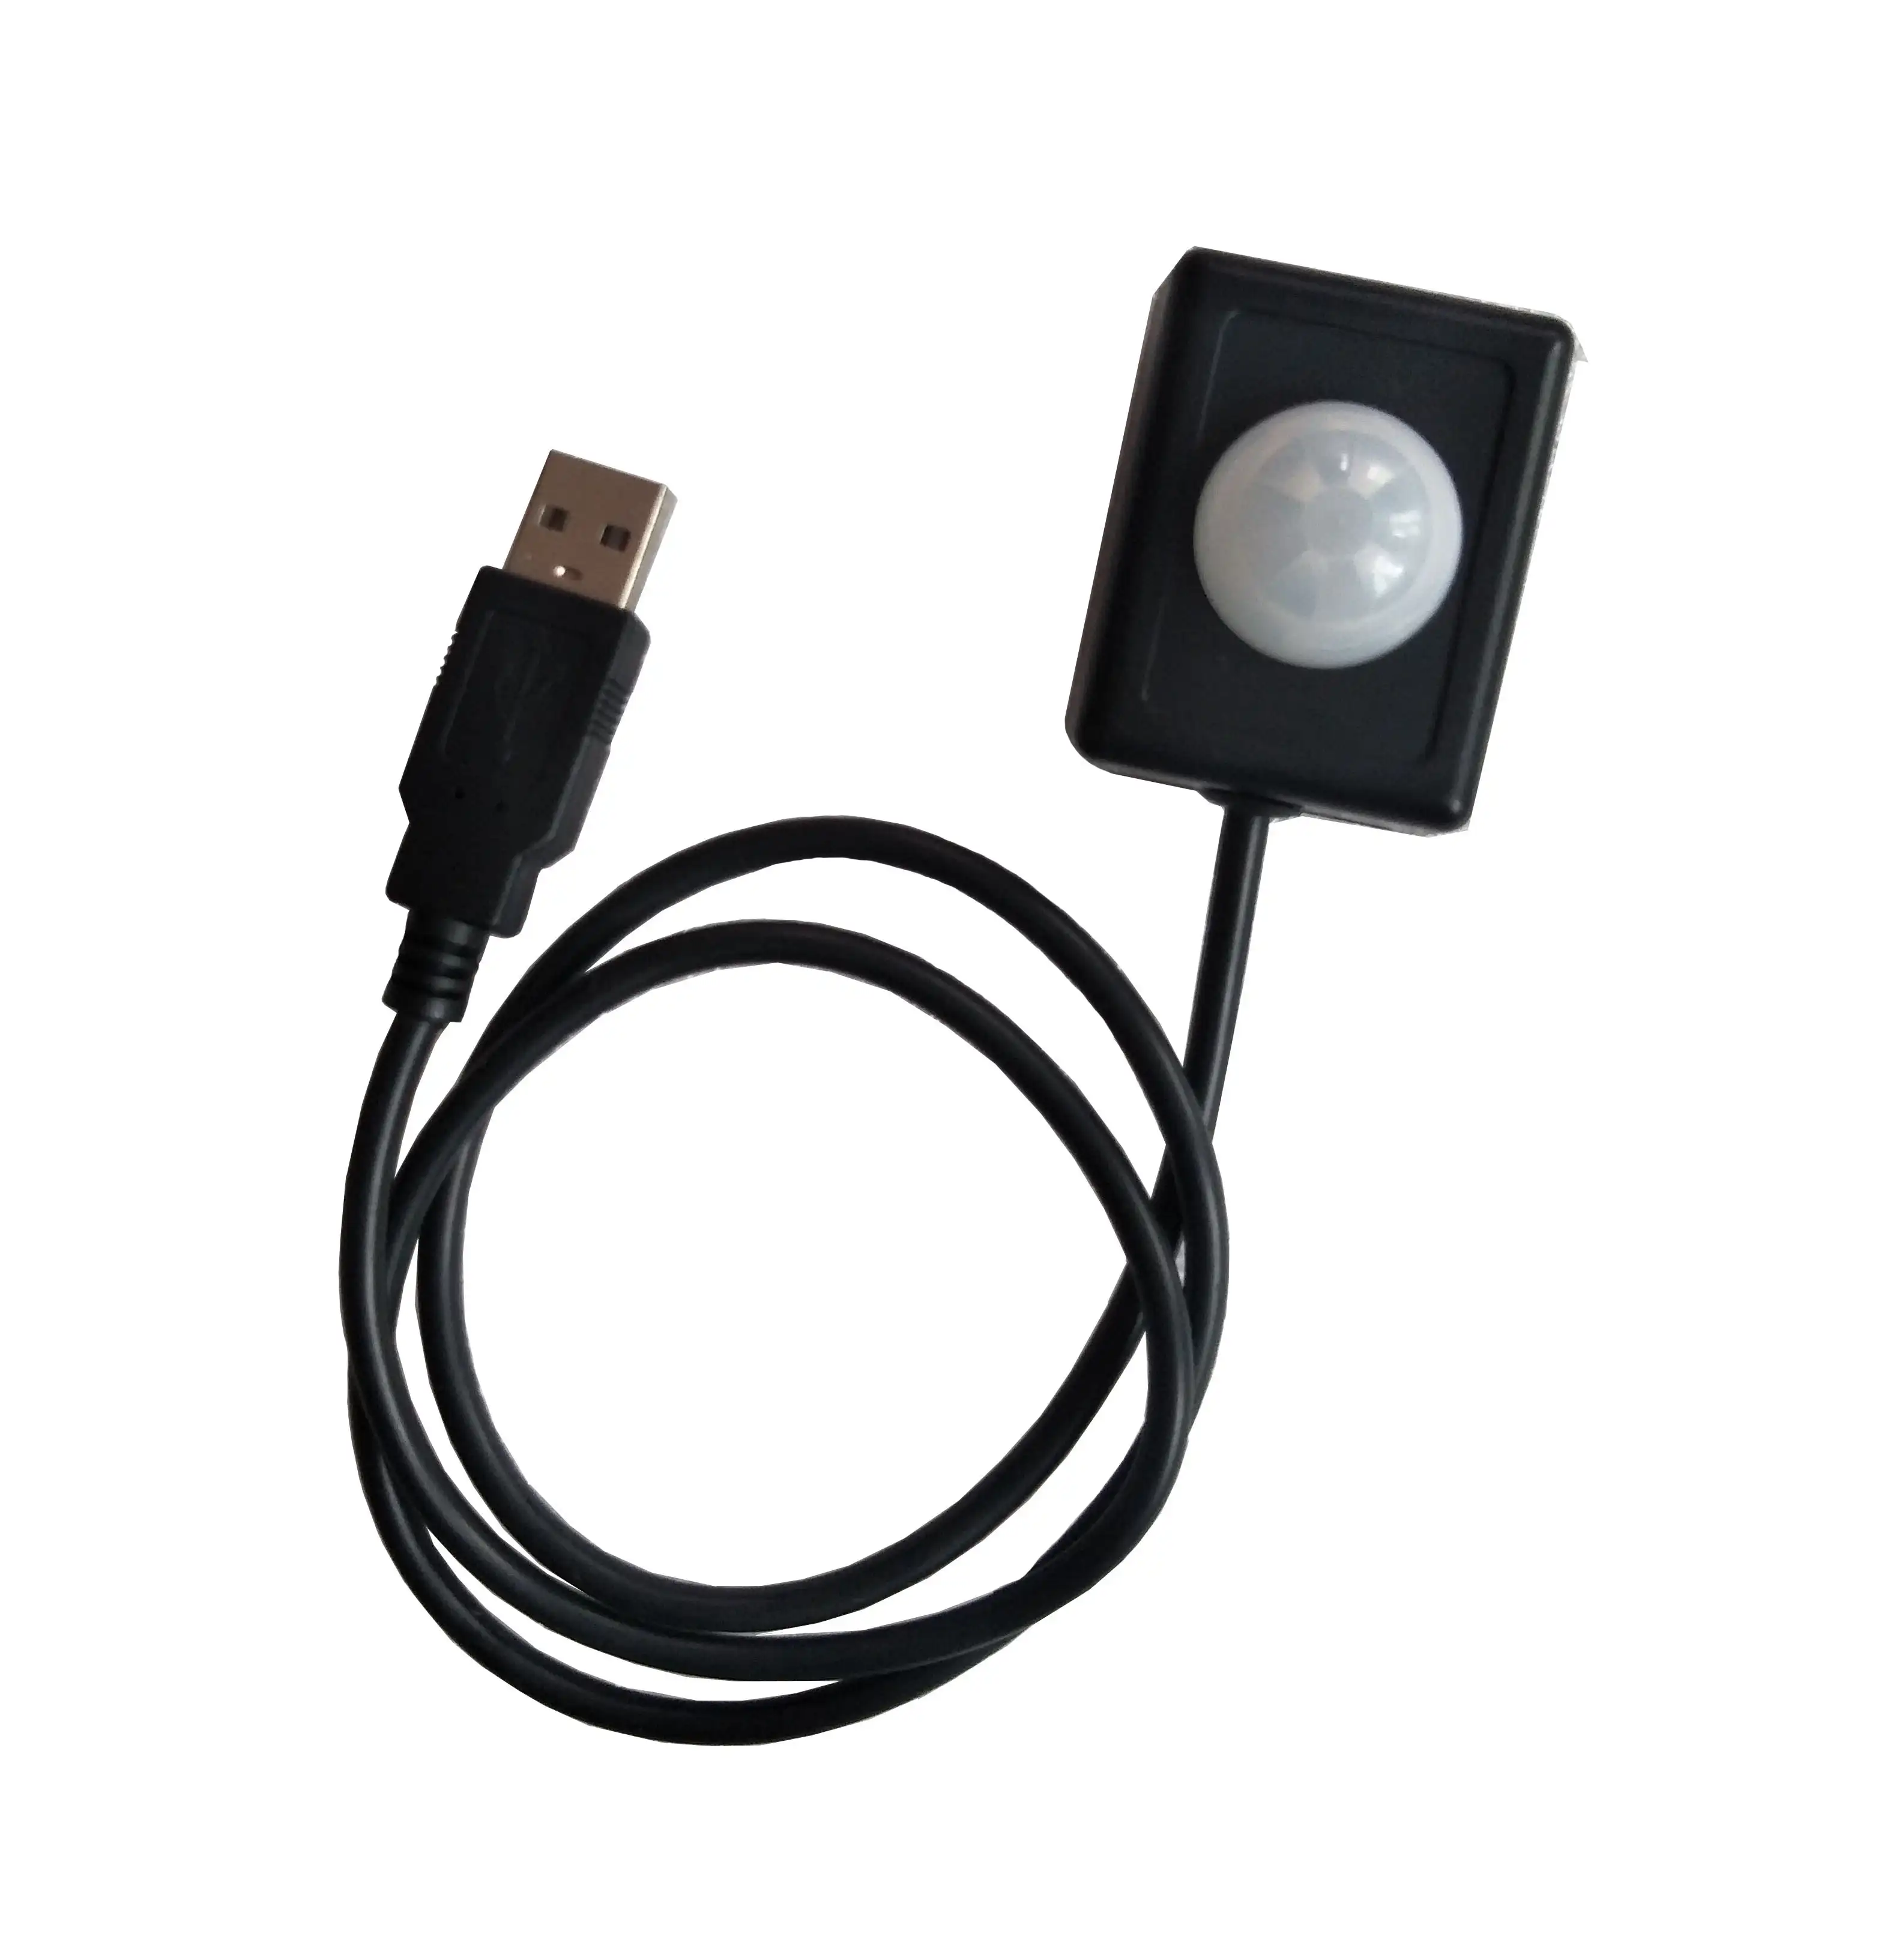 USB infrarood behuizing 5 V sensoren PIR motion sensor schakelaar voor motion sensor